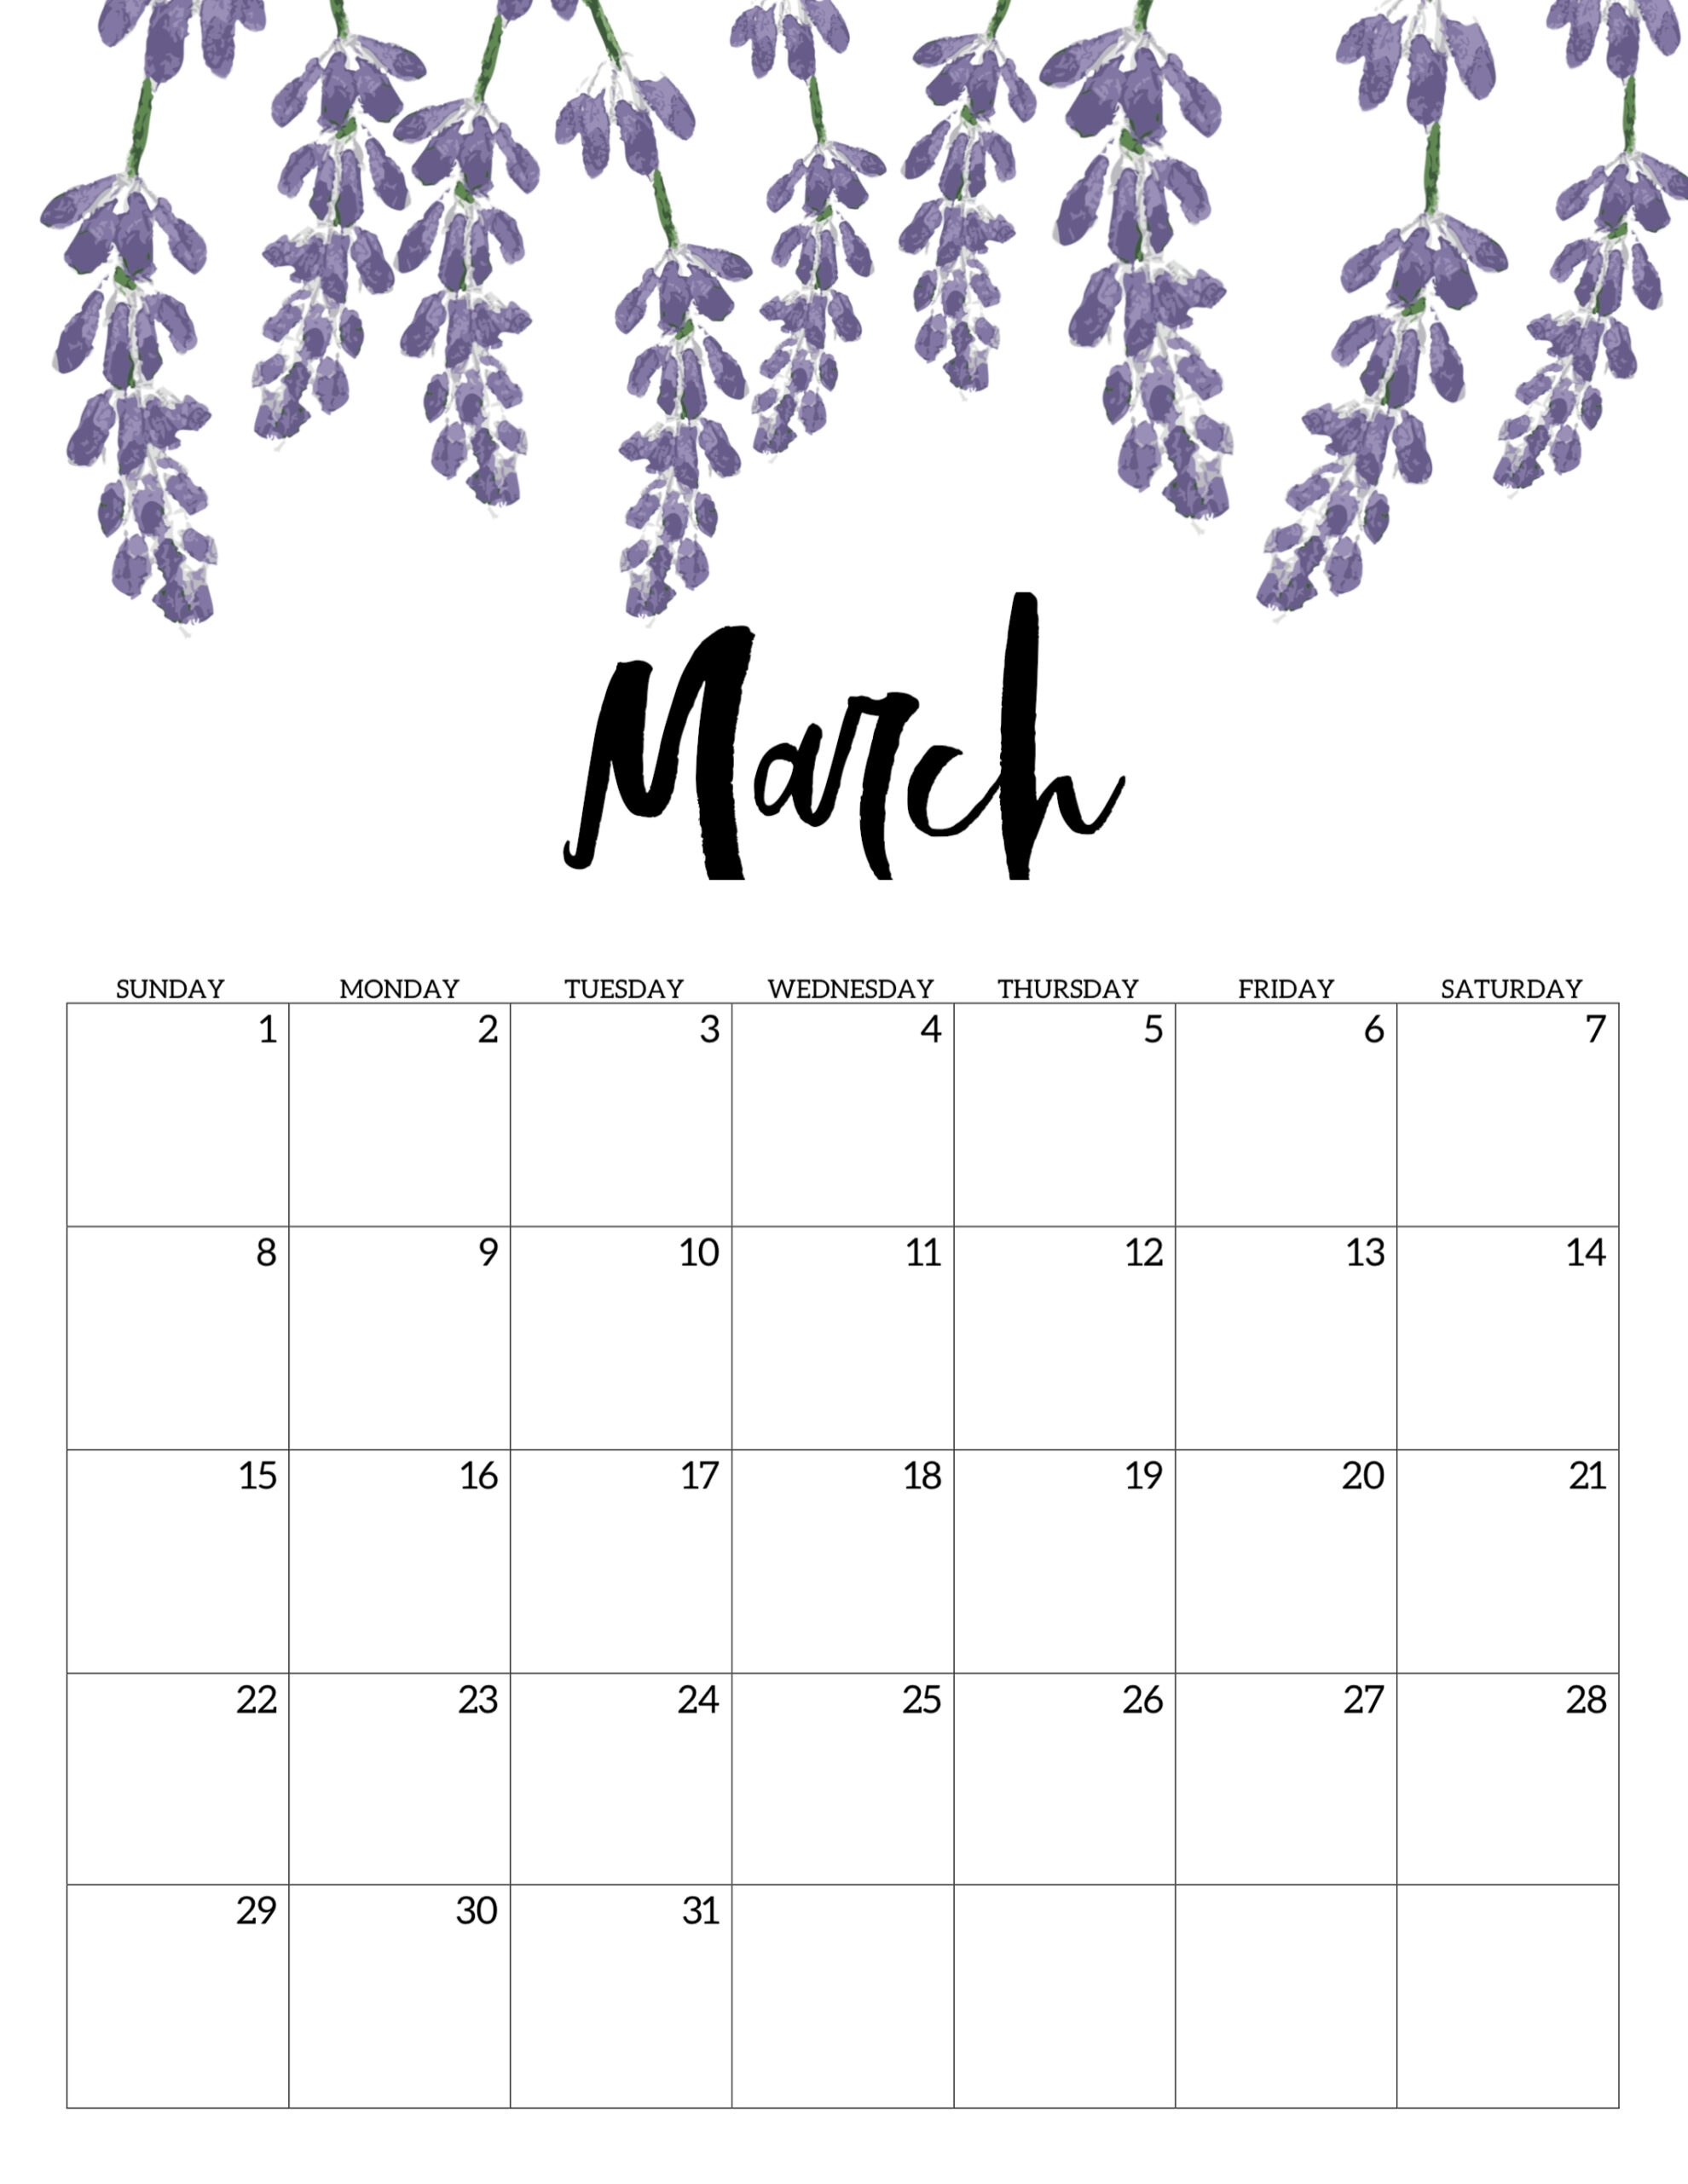 Free Printable Calendar 2020 - Floral - Paper Trail Design Exceptional 2020 Black And White Free Printable Calendar